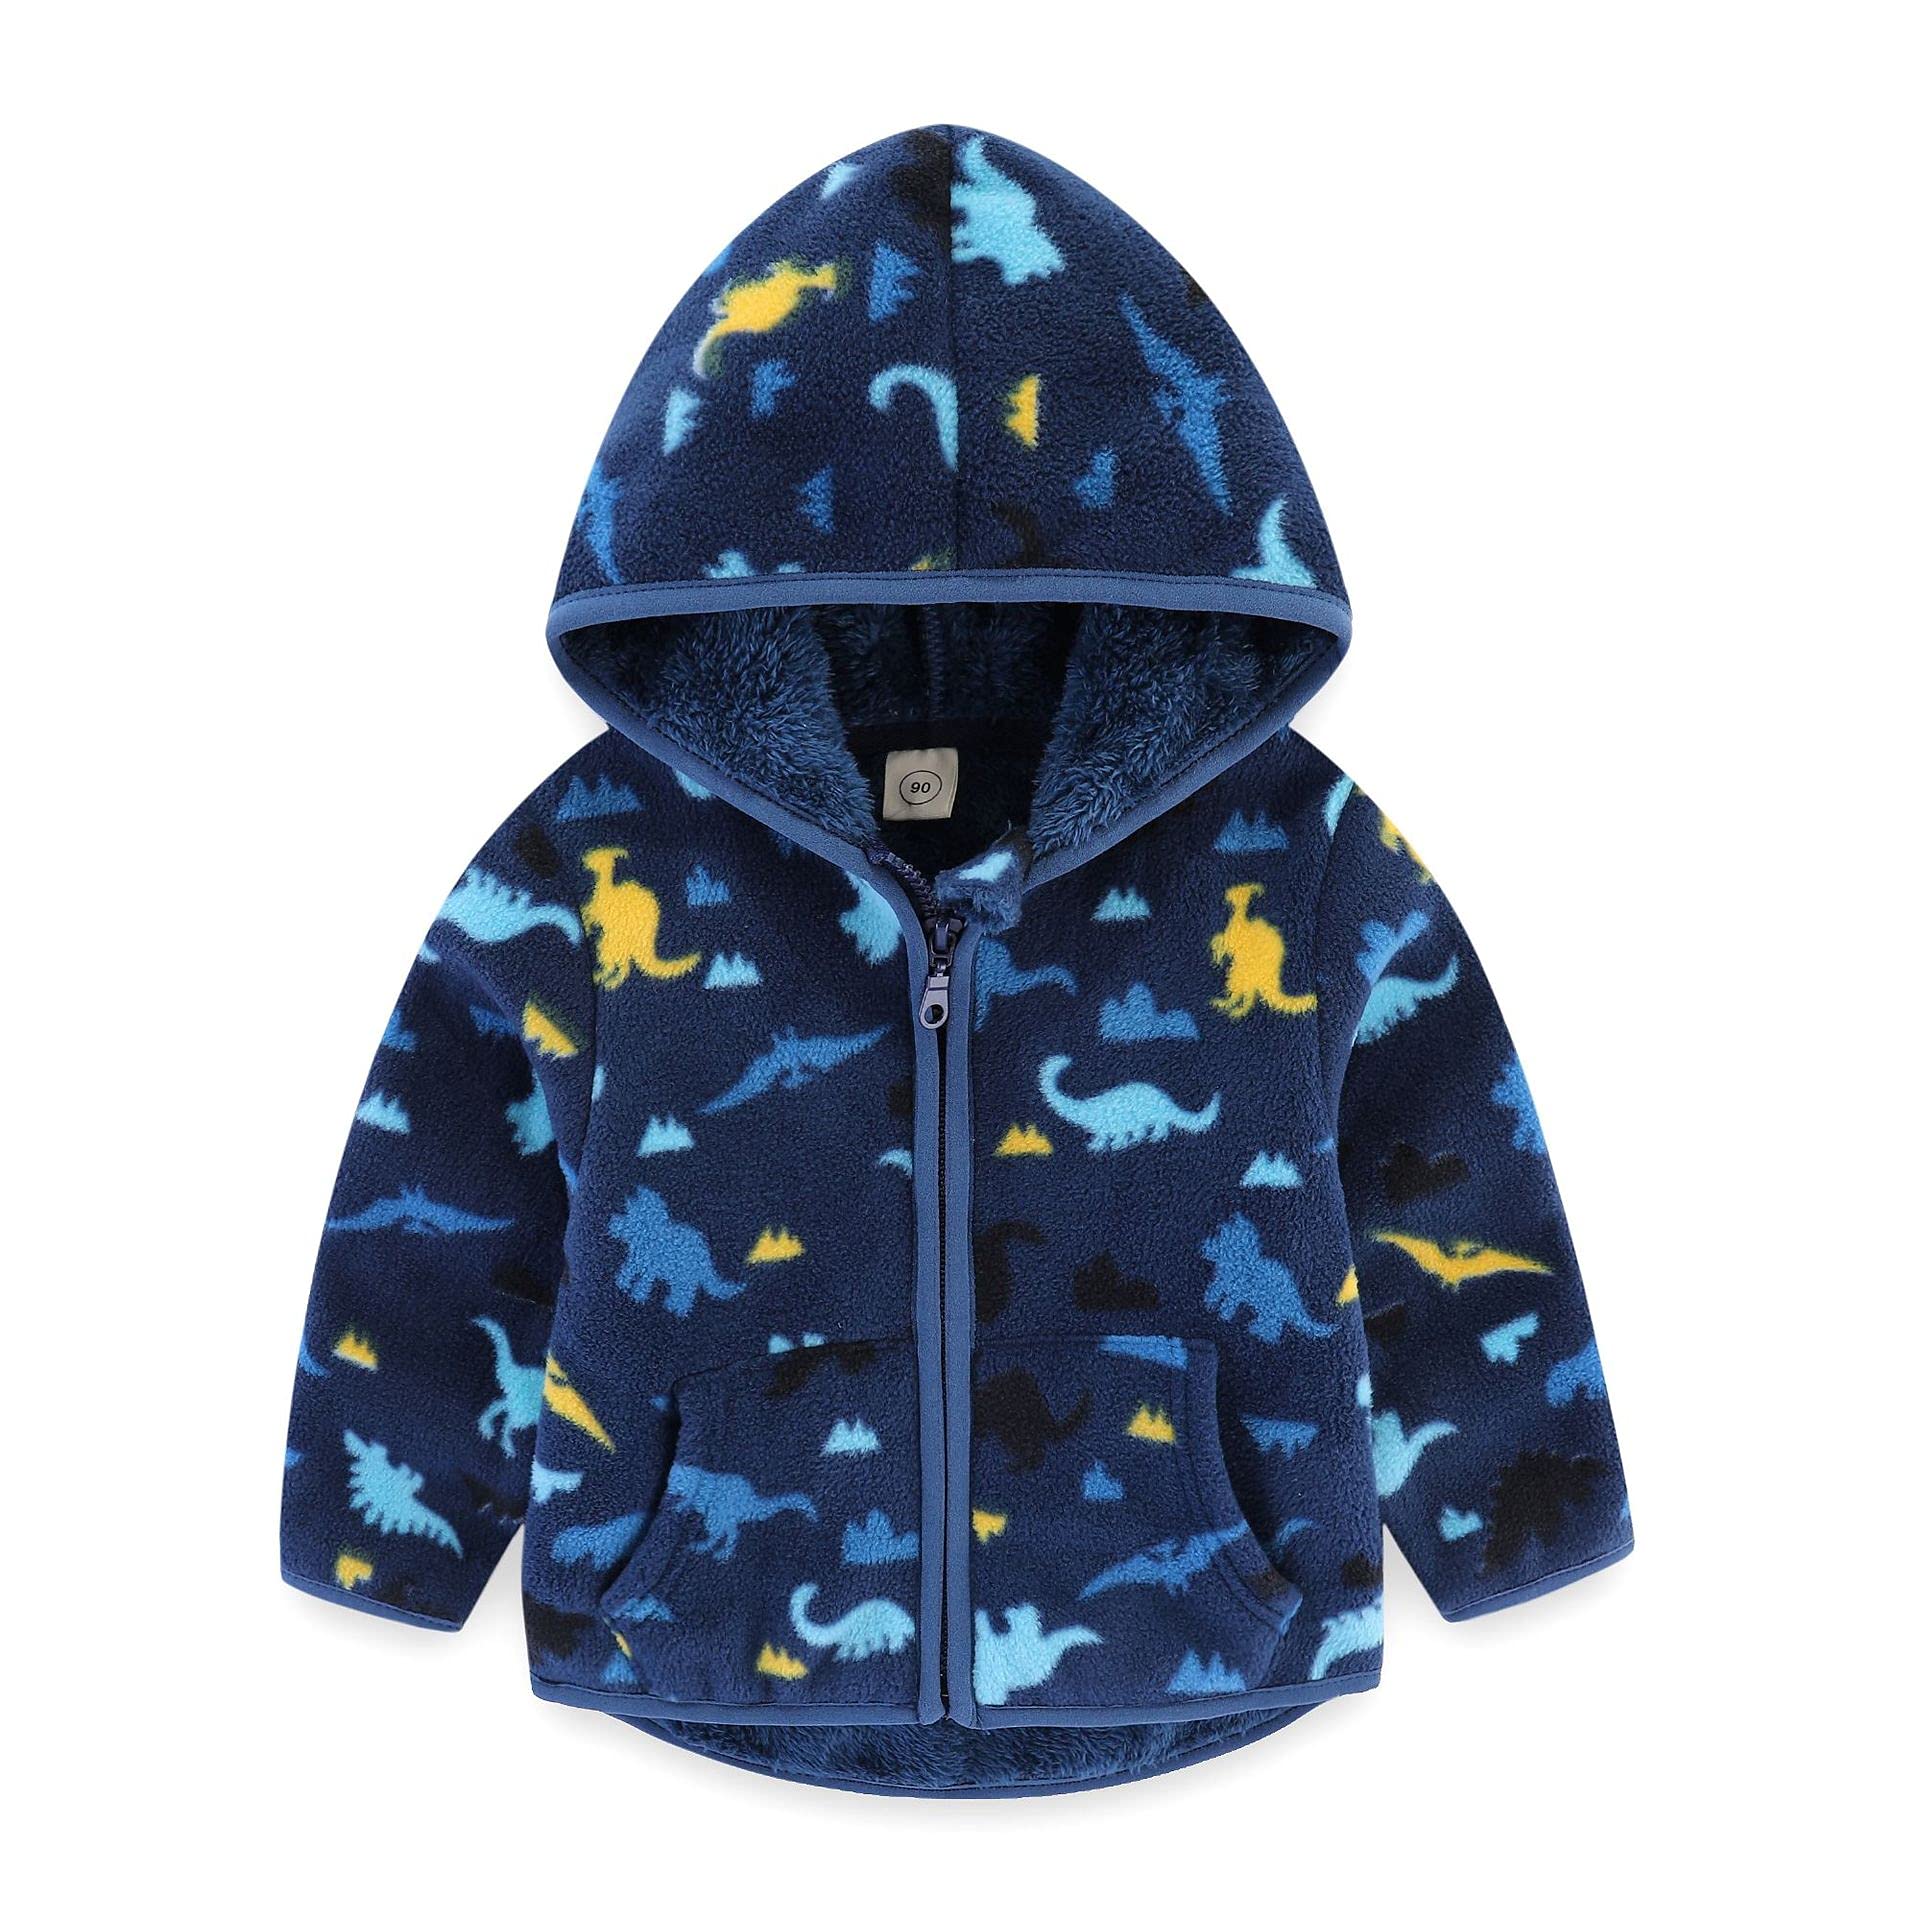 Feidoog Toddler Polar Fleece Jacket Hoodedababy Boys Girls Autumn Winter Long Sleeve Thick Warm Outerwear,Blue Dinosaur,2-3T